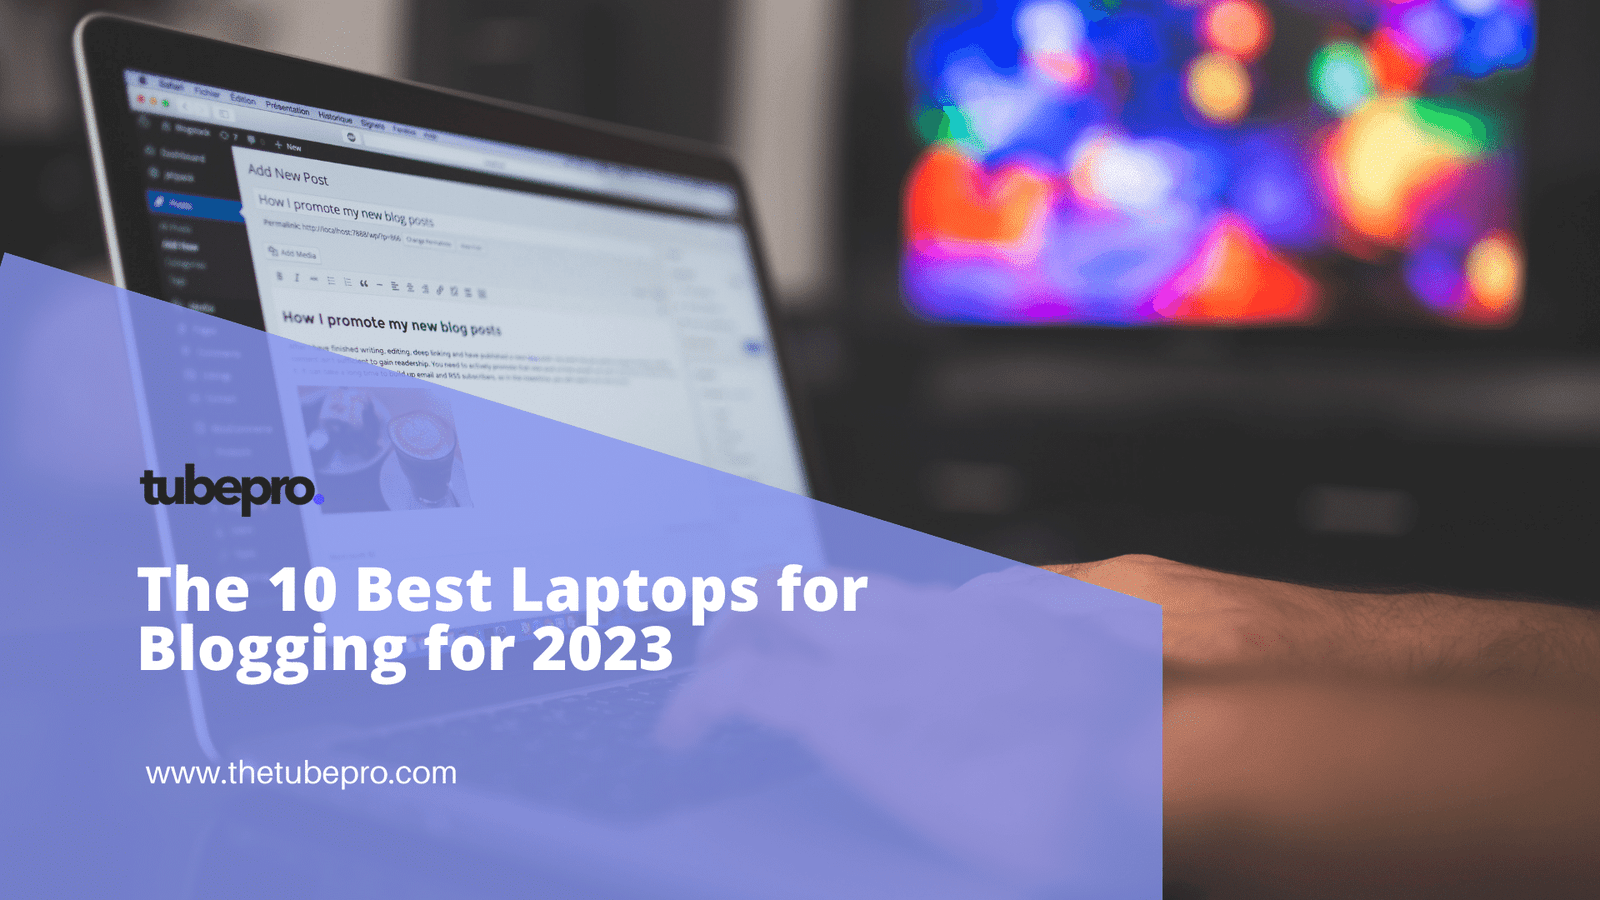 The 10 Best Laptops for Blogging for 2023